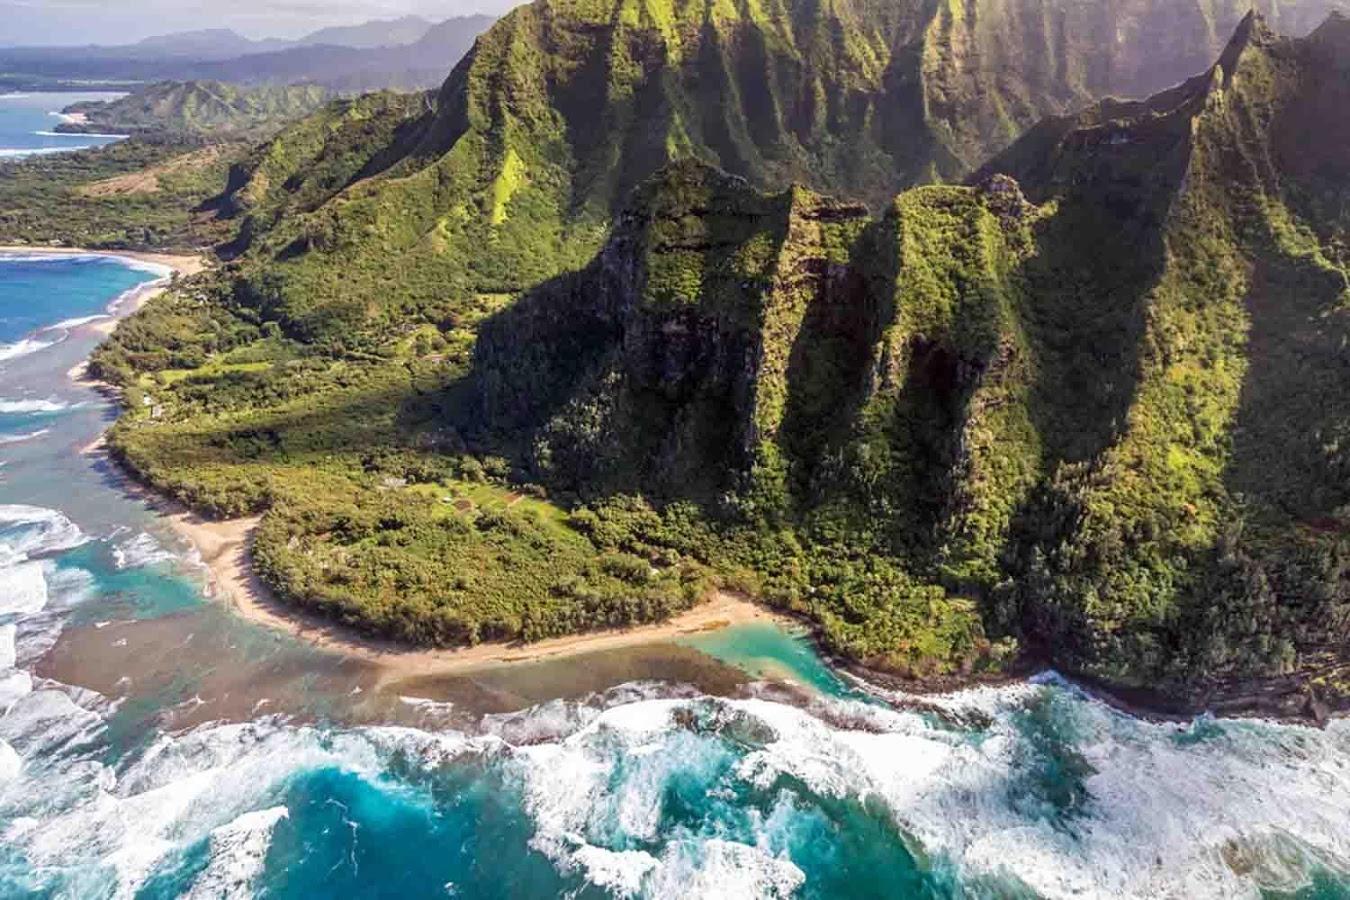 Download Hawaiian Islands Wallpaper, HD Backgrounds Download - itl.cat